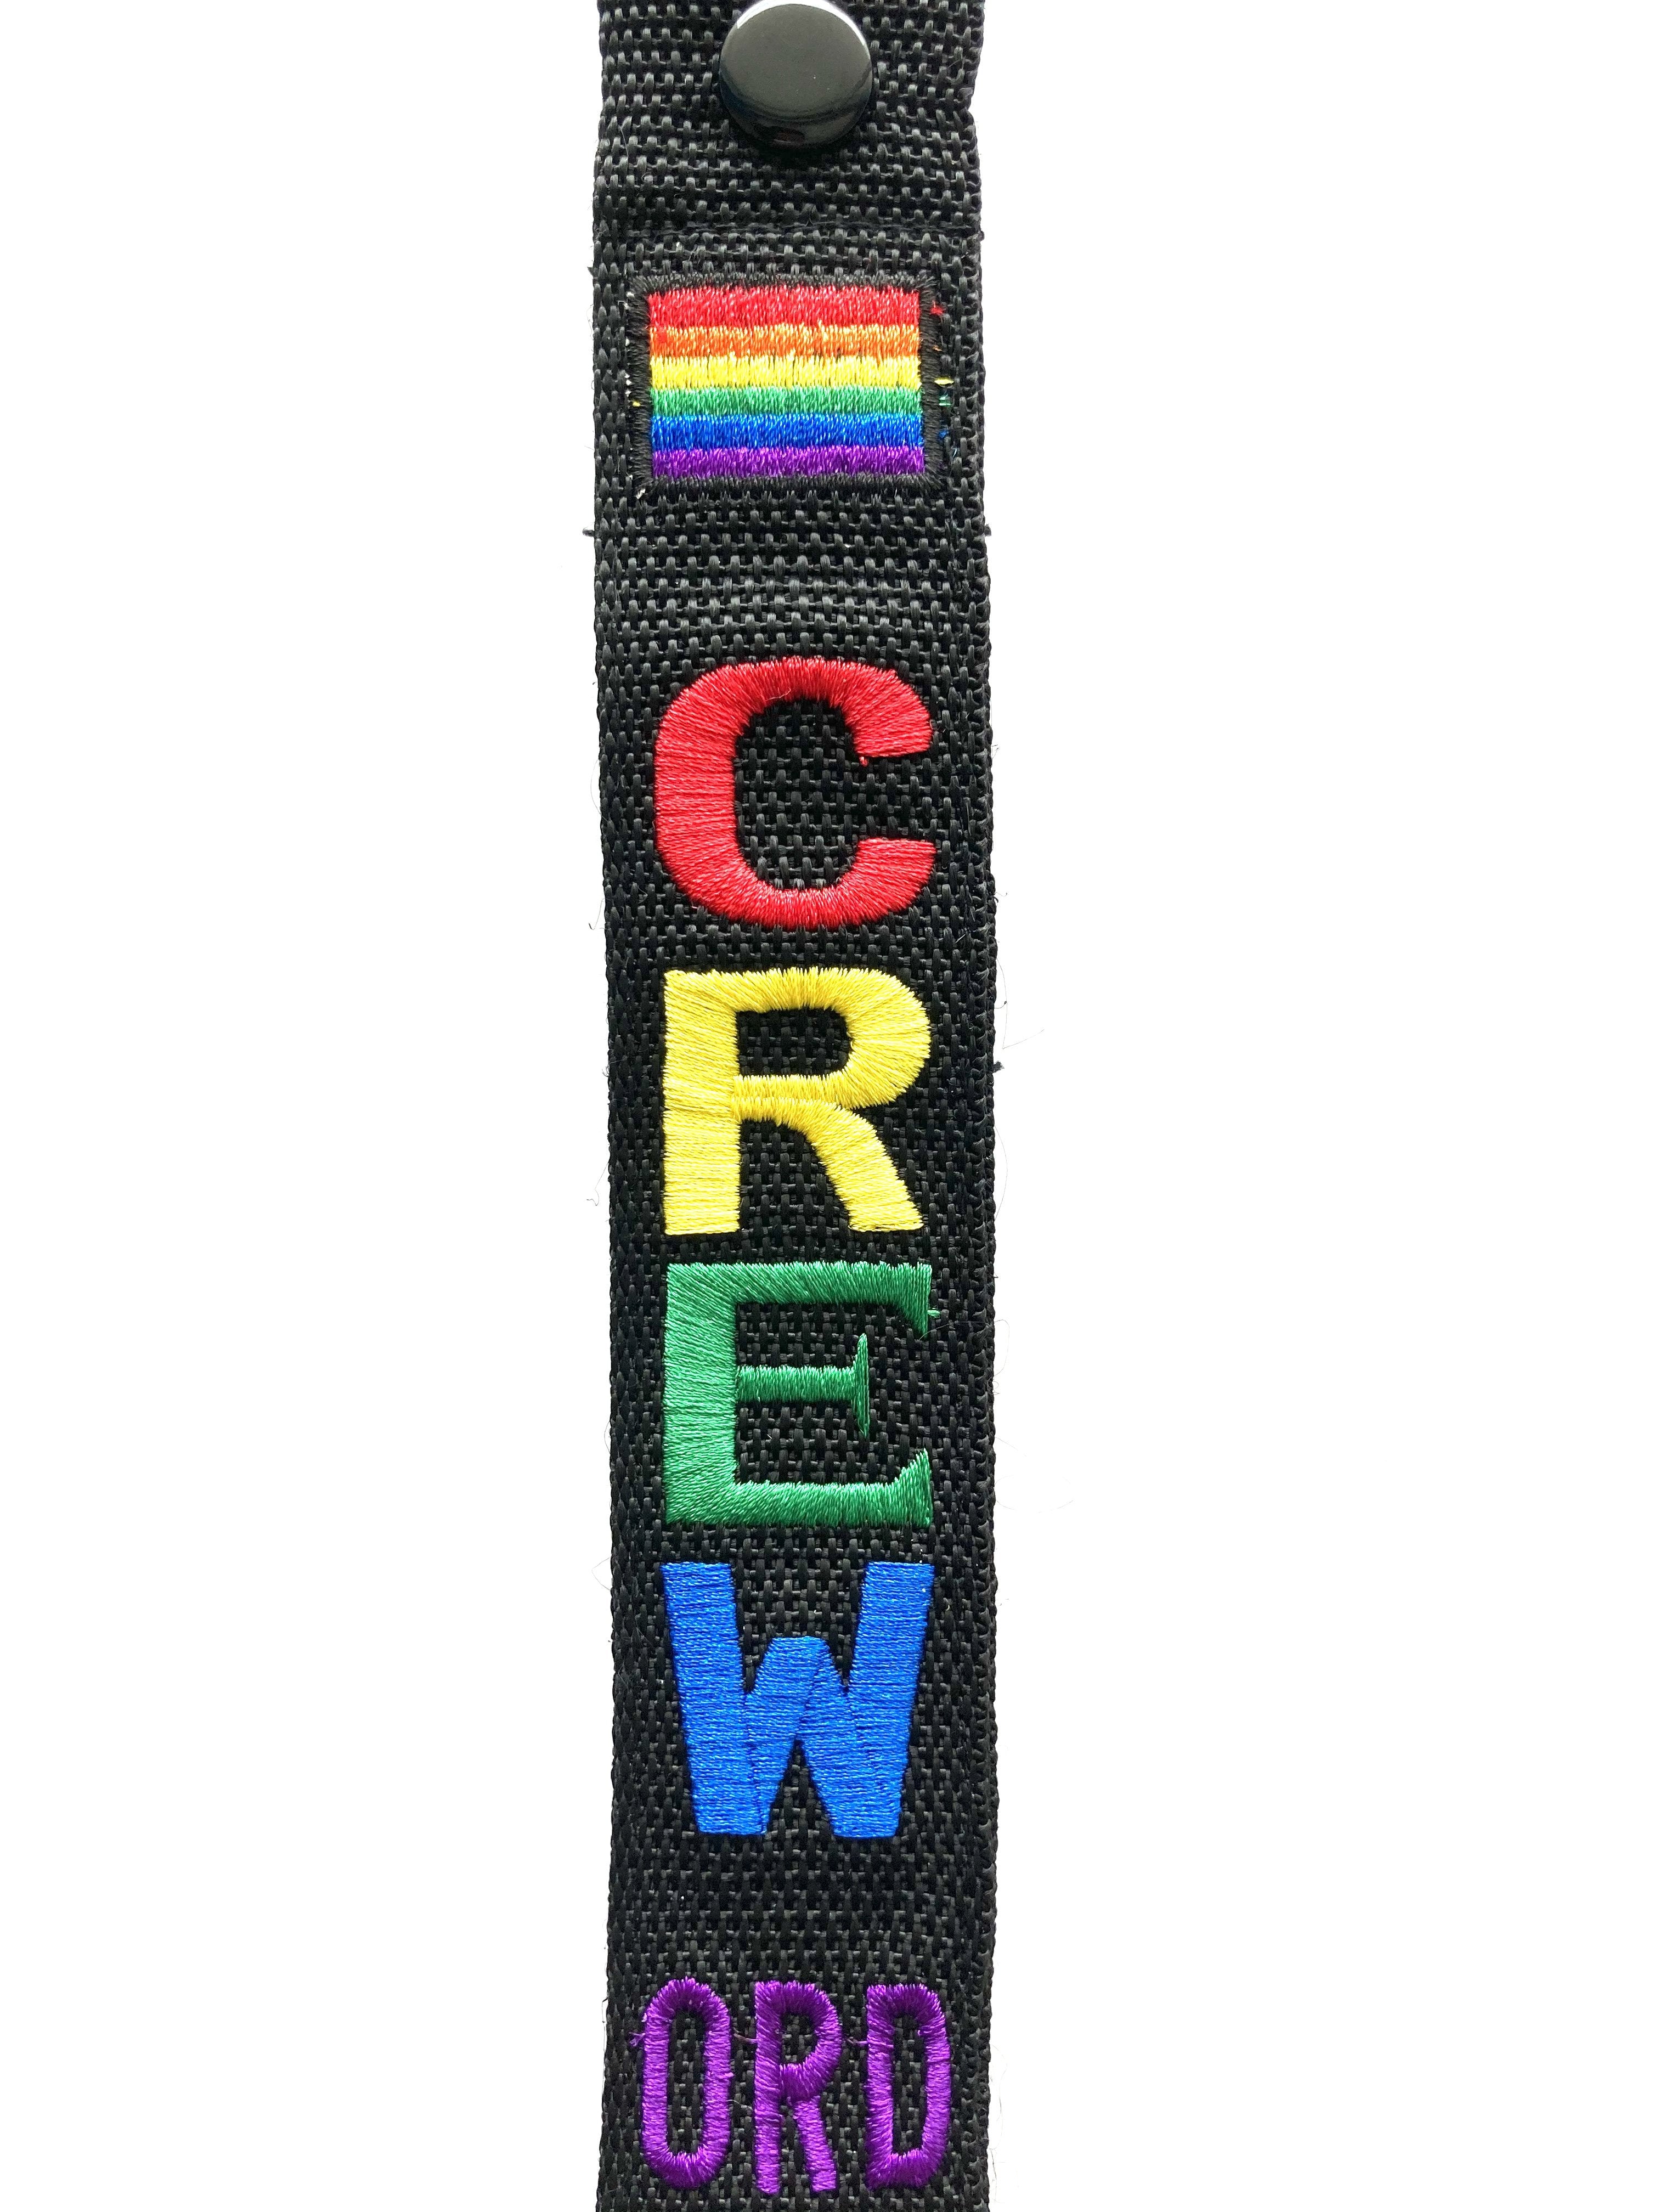 CREW Luggage Tag - ORD Pride